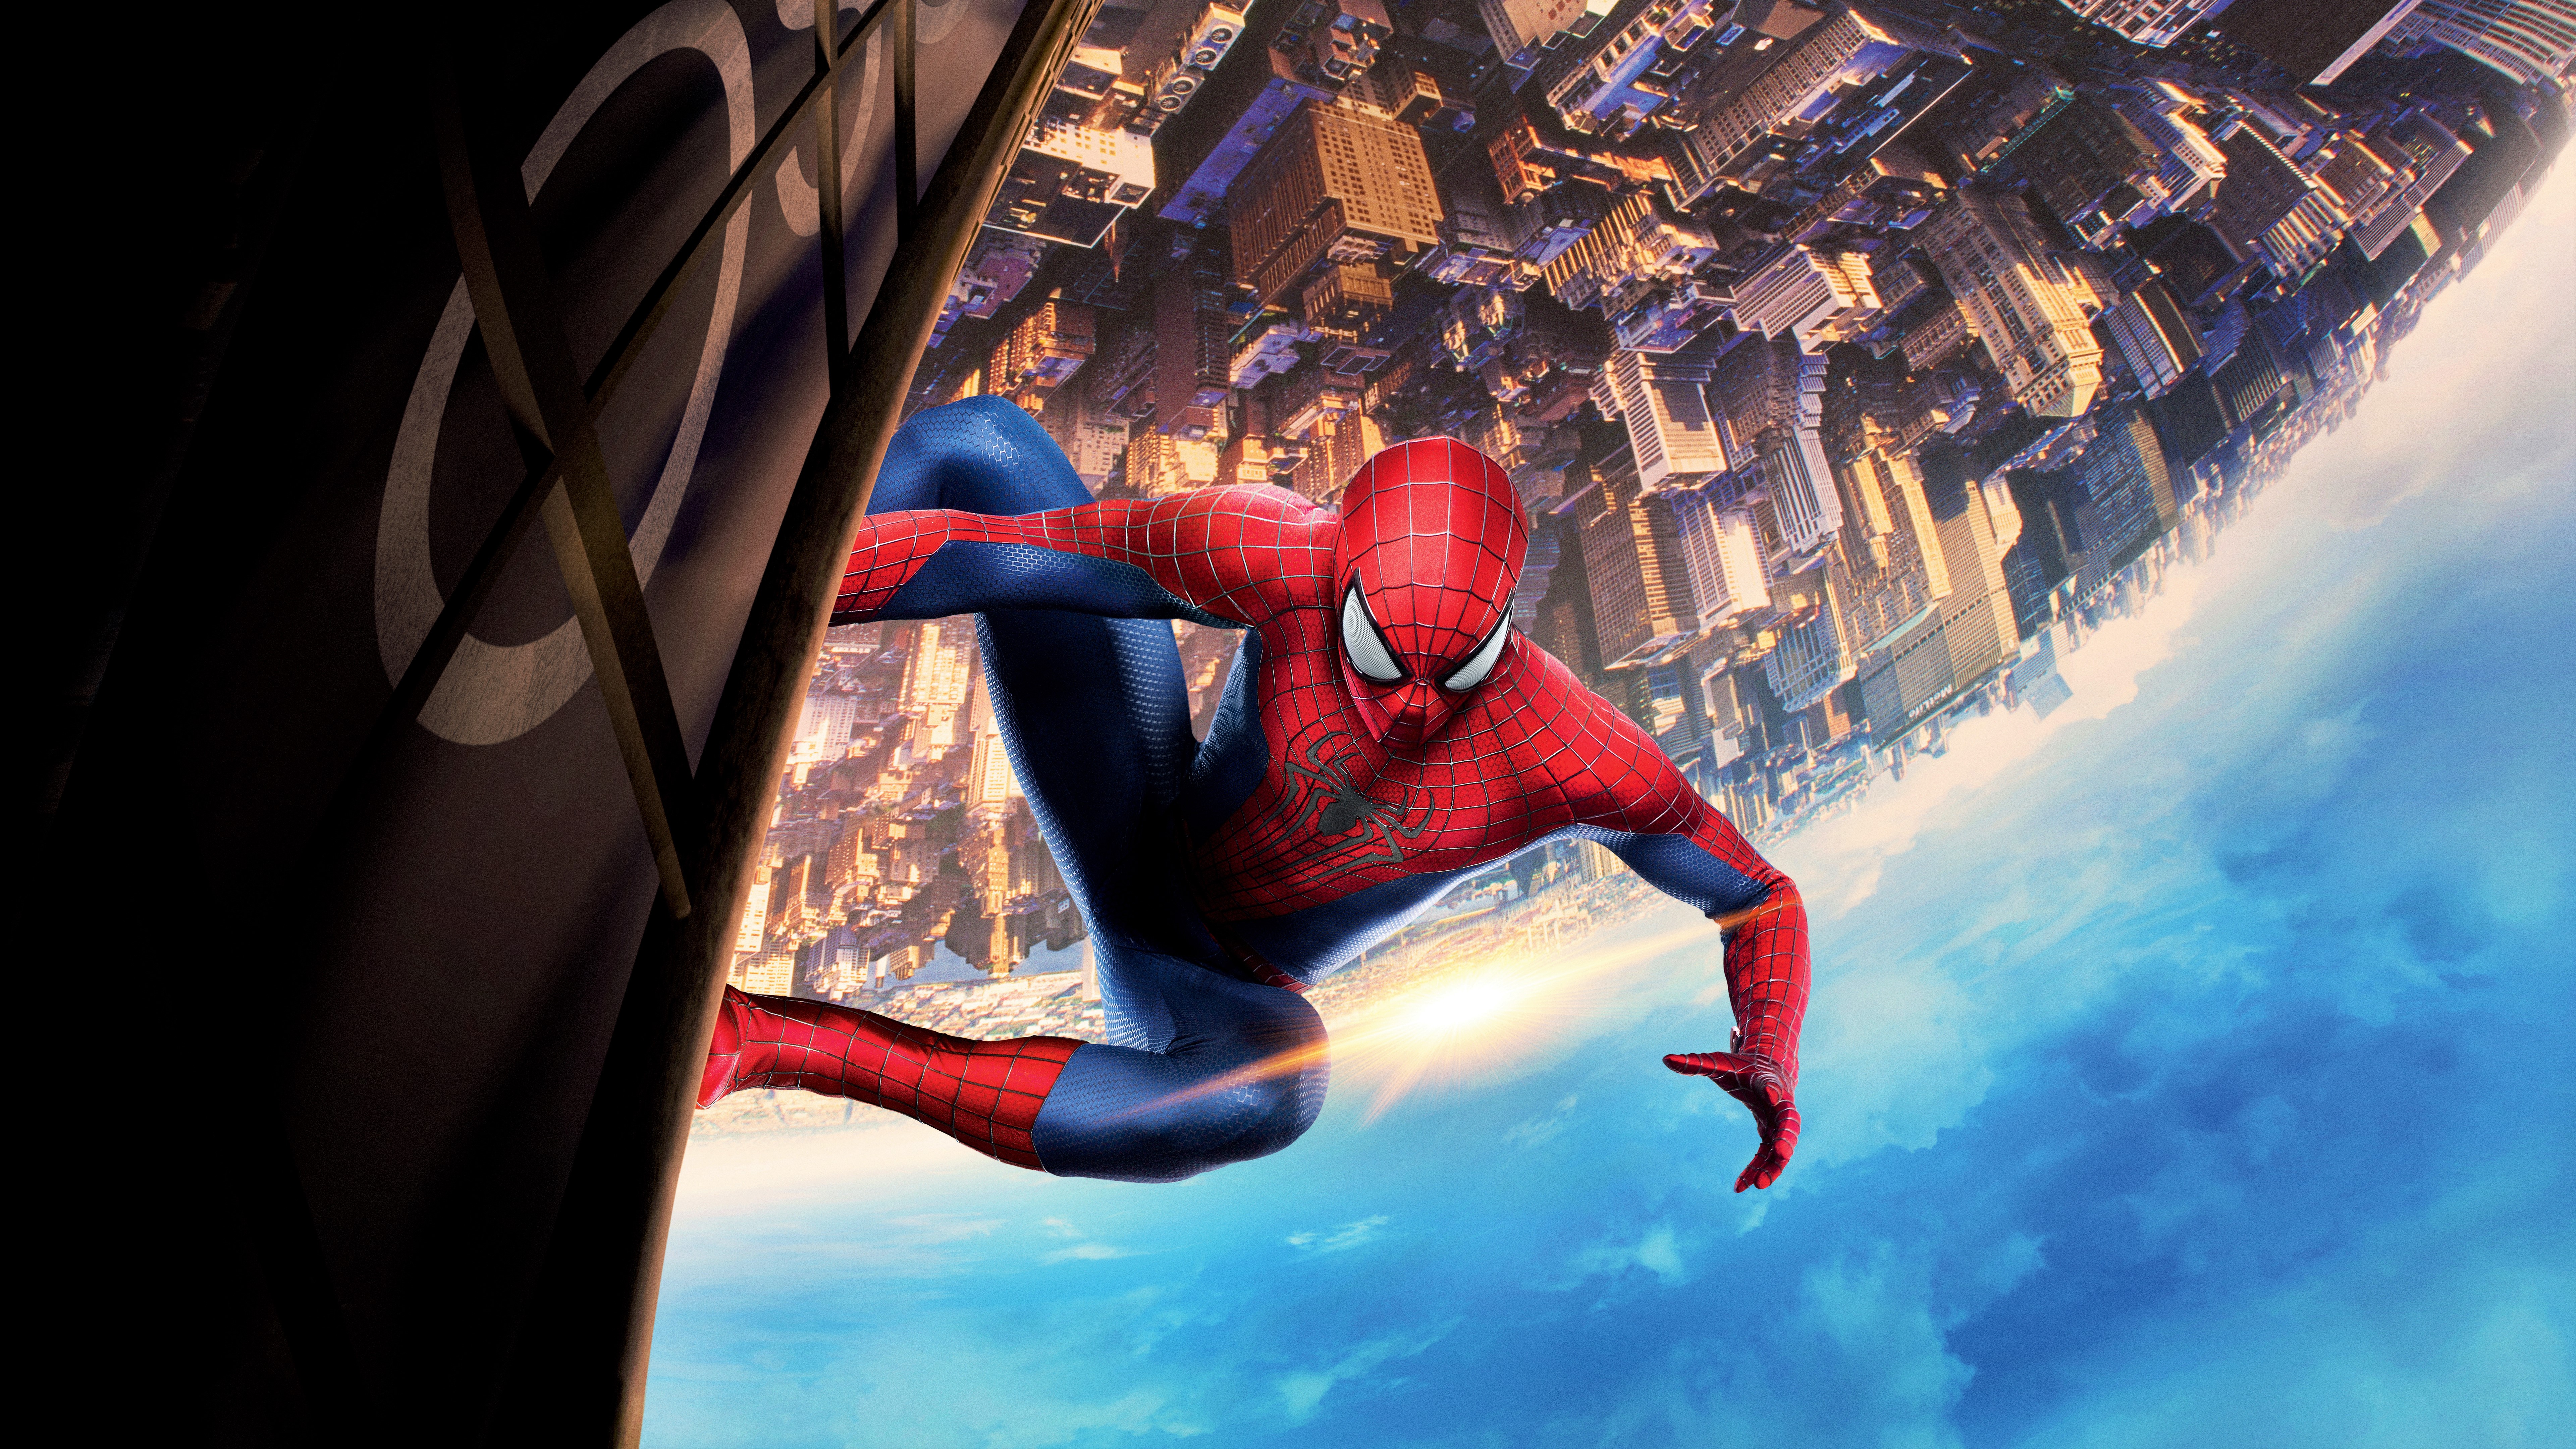 600+ 4K Spider-Man Fondos de pantalla | Fondos de Escritorio